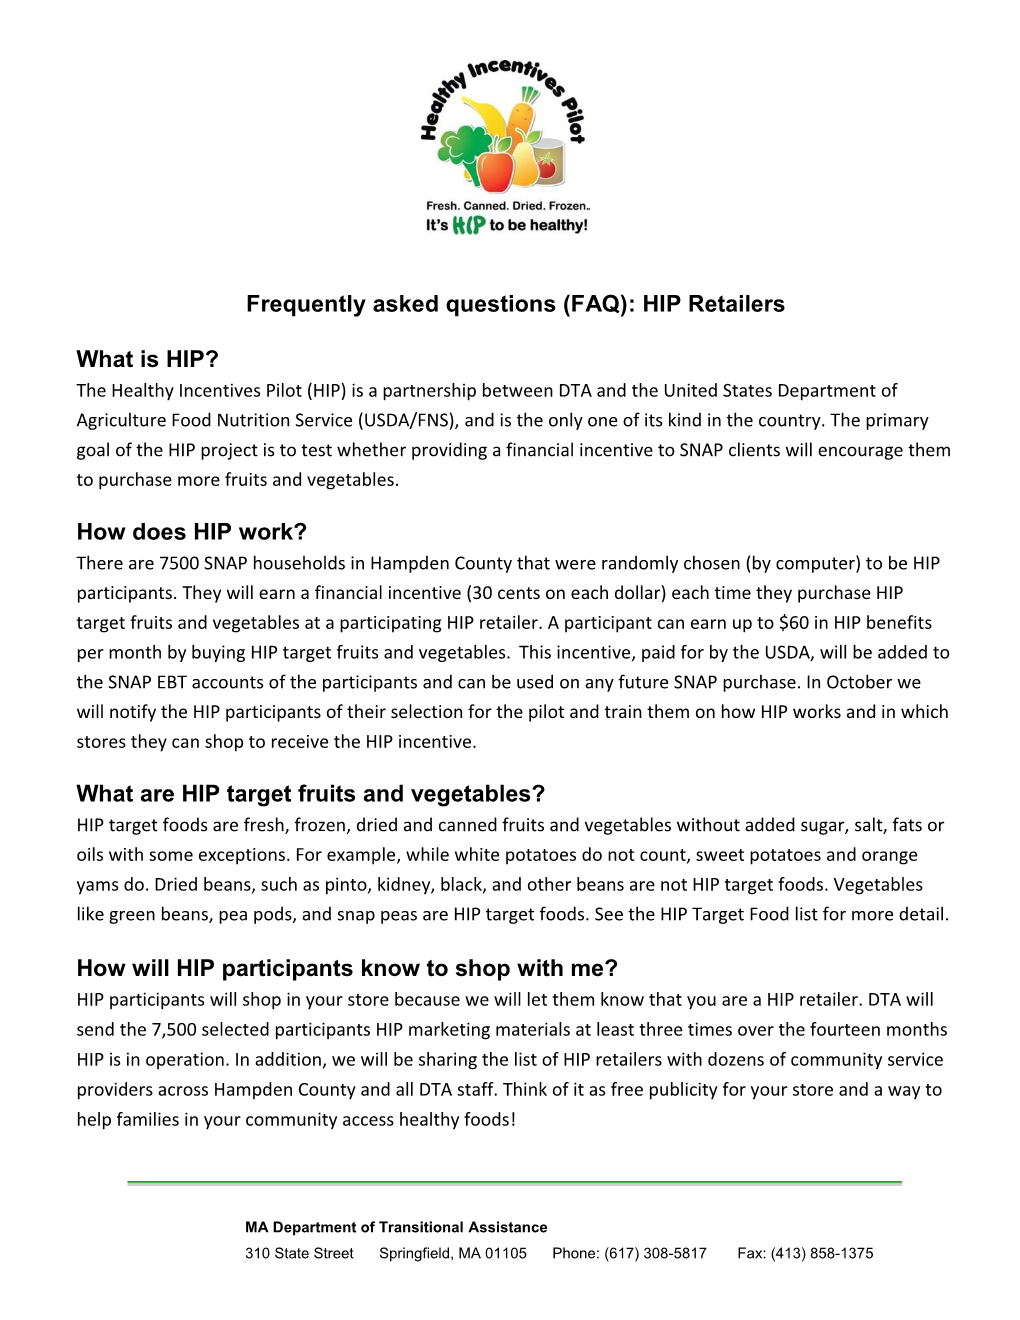 HIP Retailers FAQ FINAL